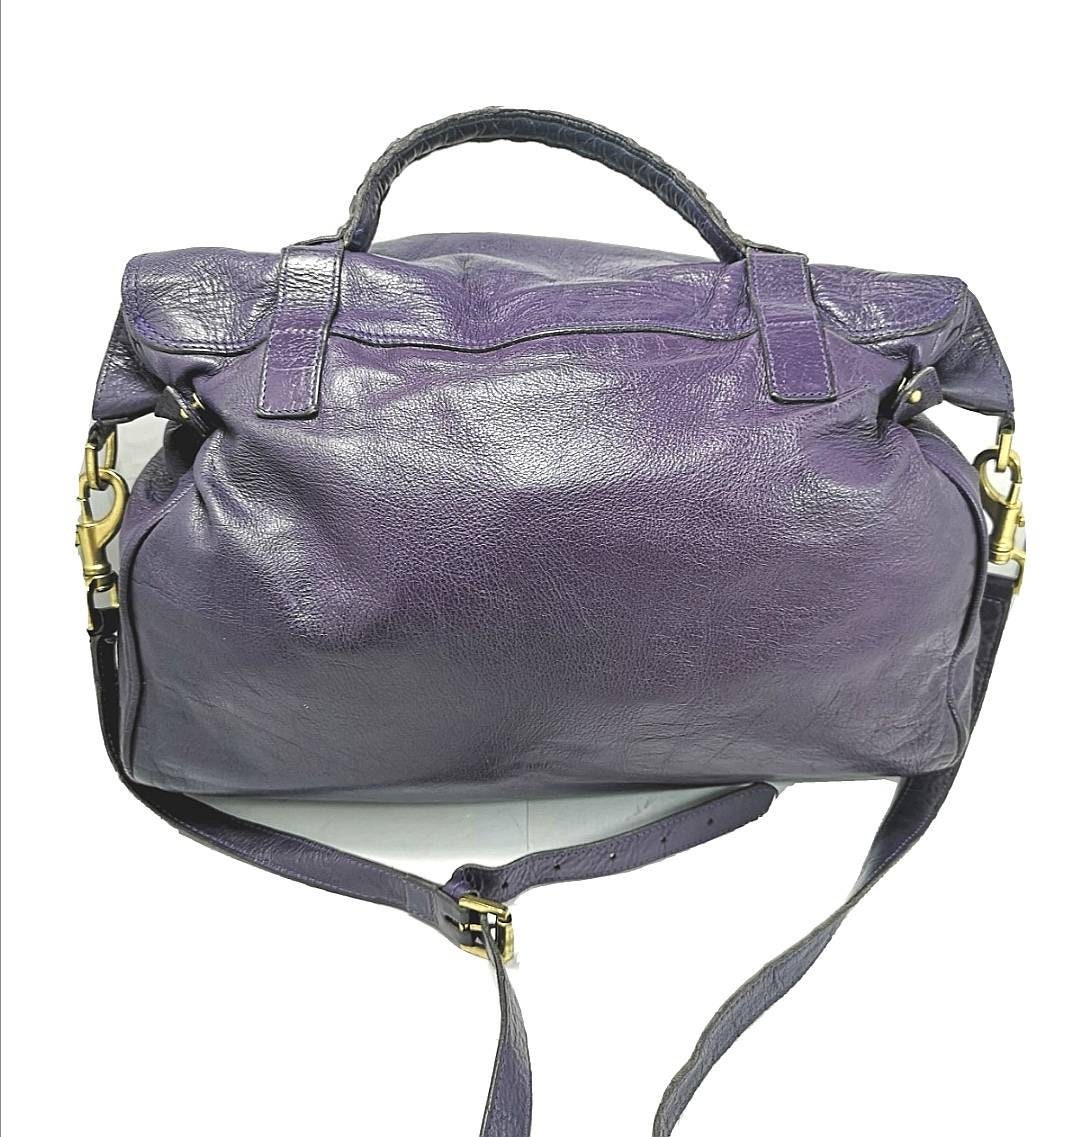 PURPLE MULBERRY Alexa Bag - Mulberry Satchel Bag - Mulberry Hand Bag - Cross Body Purse ...